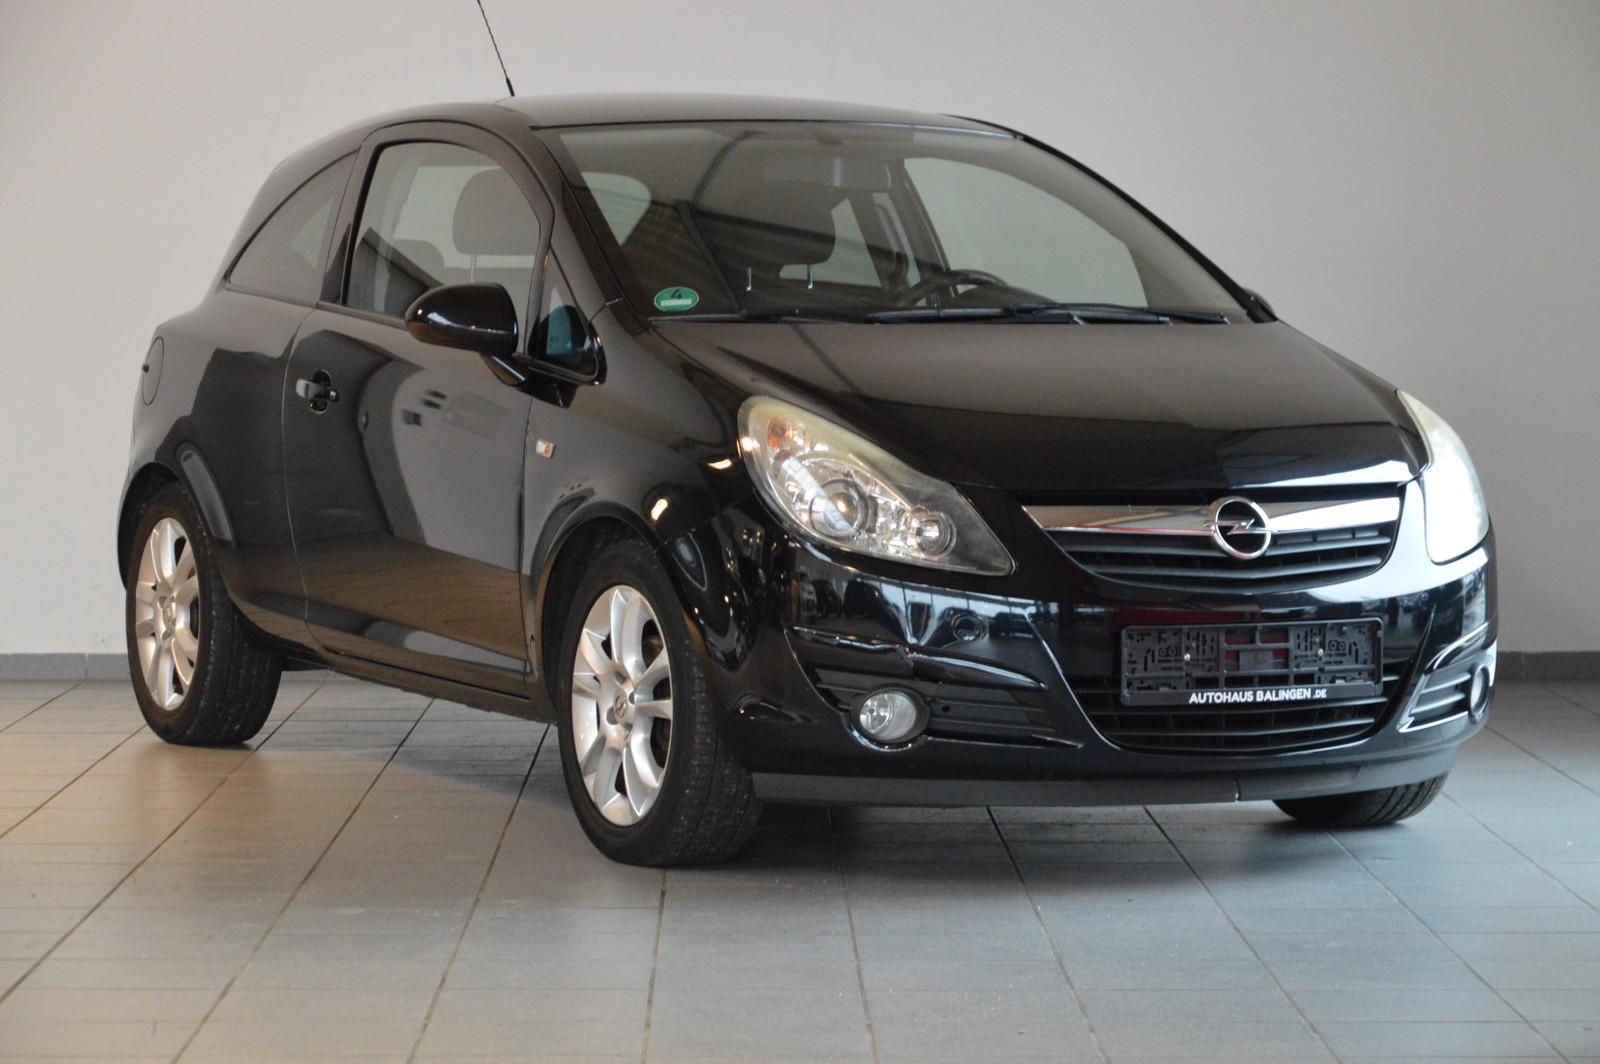 Opel Corsa E drive gebraucht kaufen in Balingen Preis 7990 eur